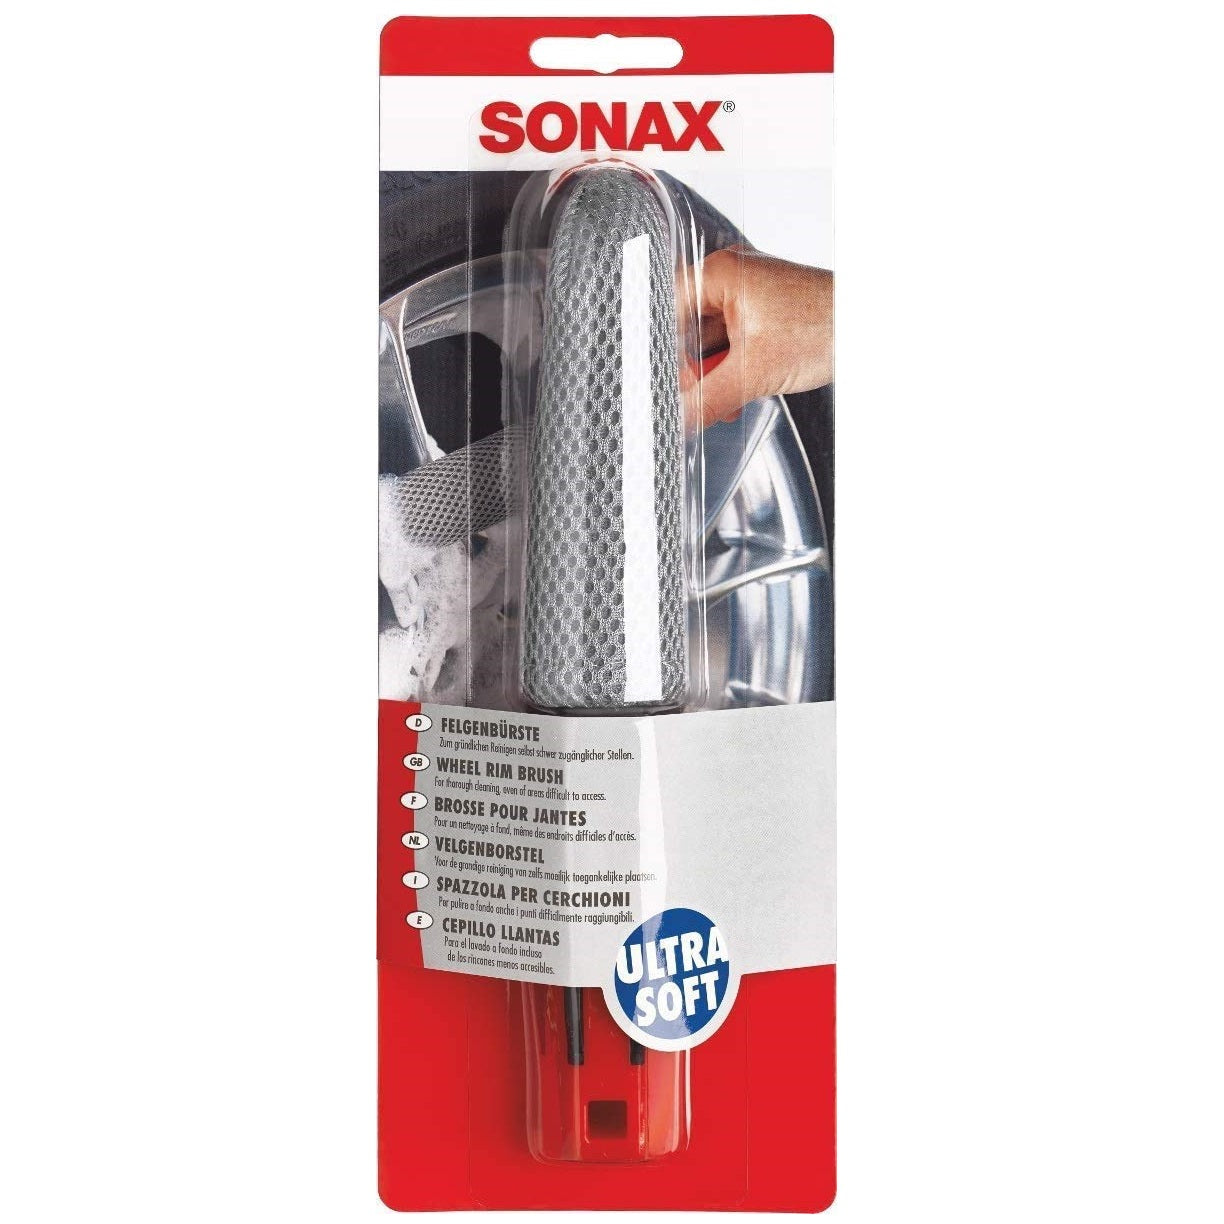 Sonax Ultra Soft Wheel Rim Brush – Autozeel